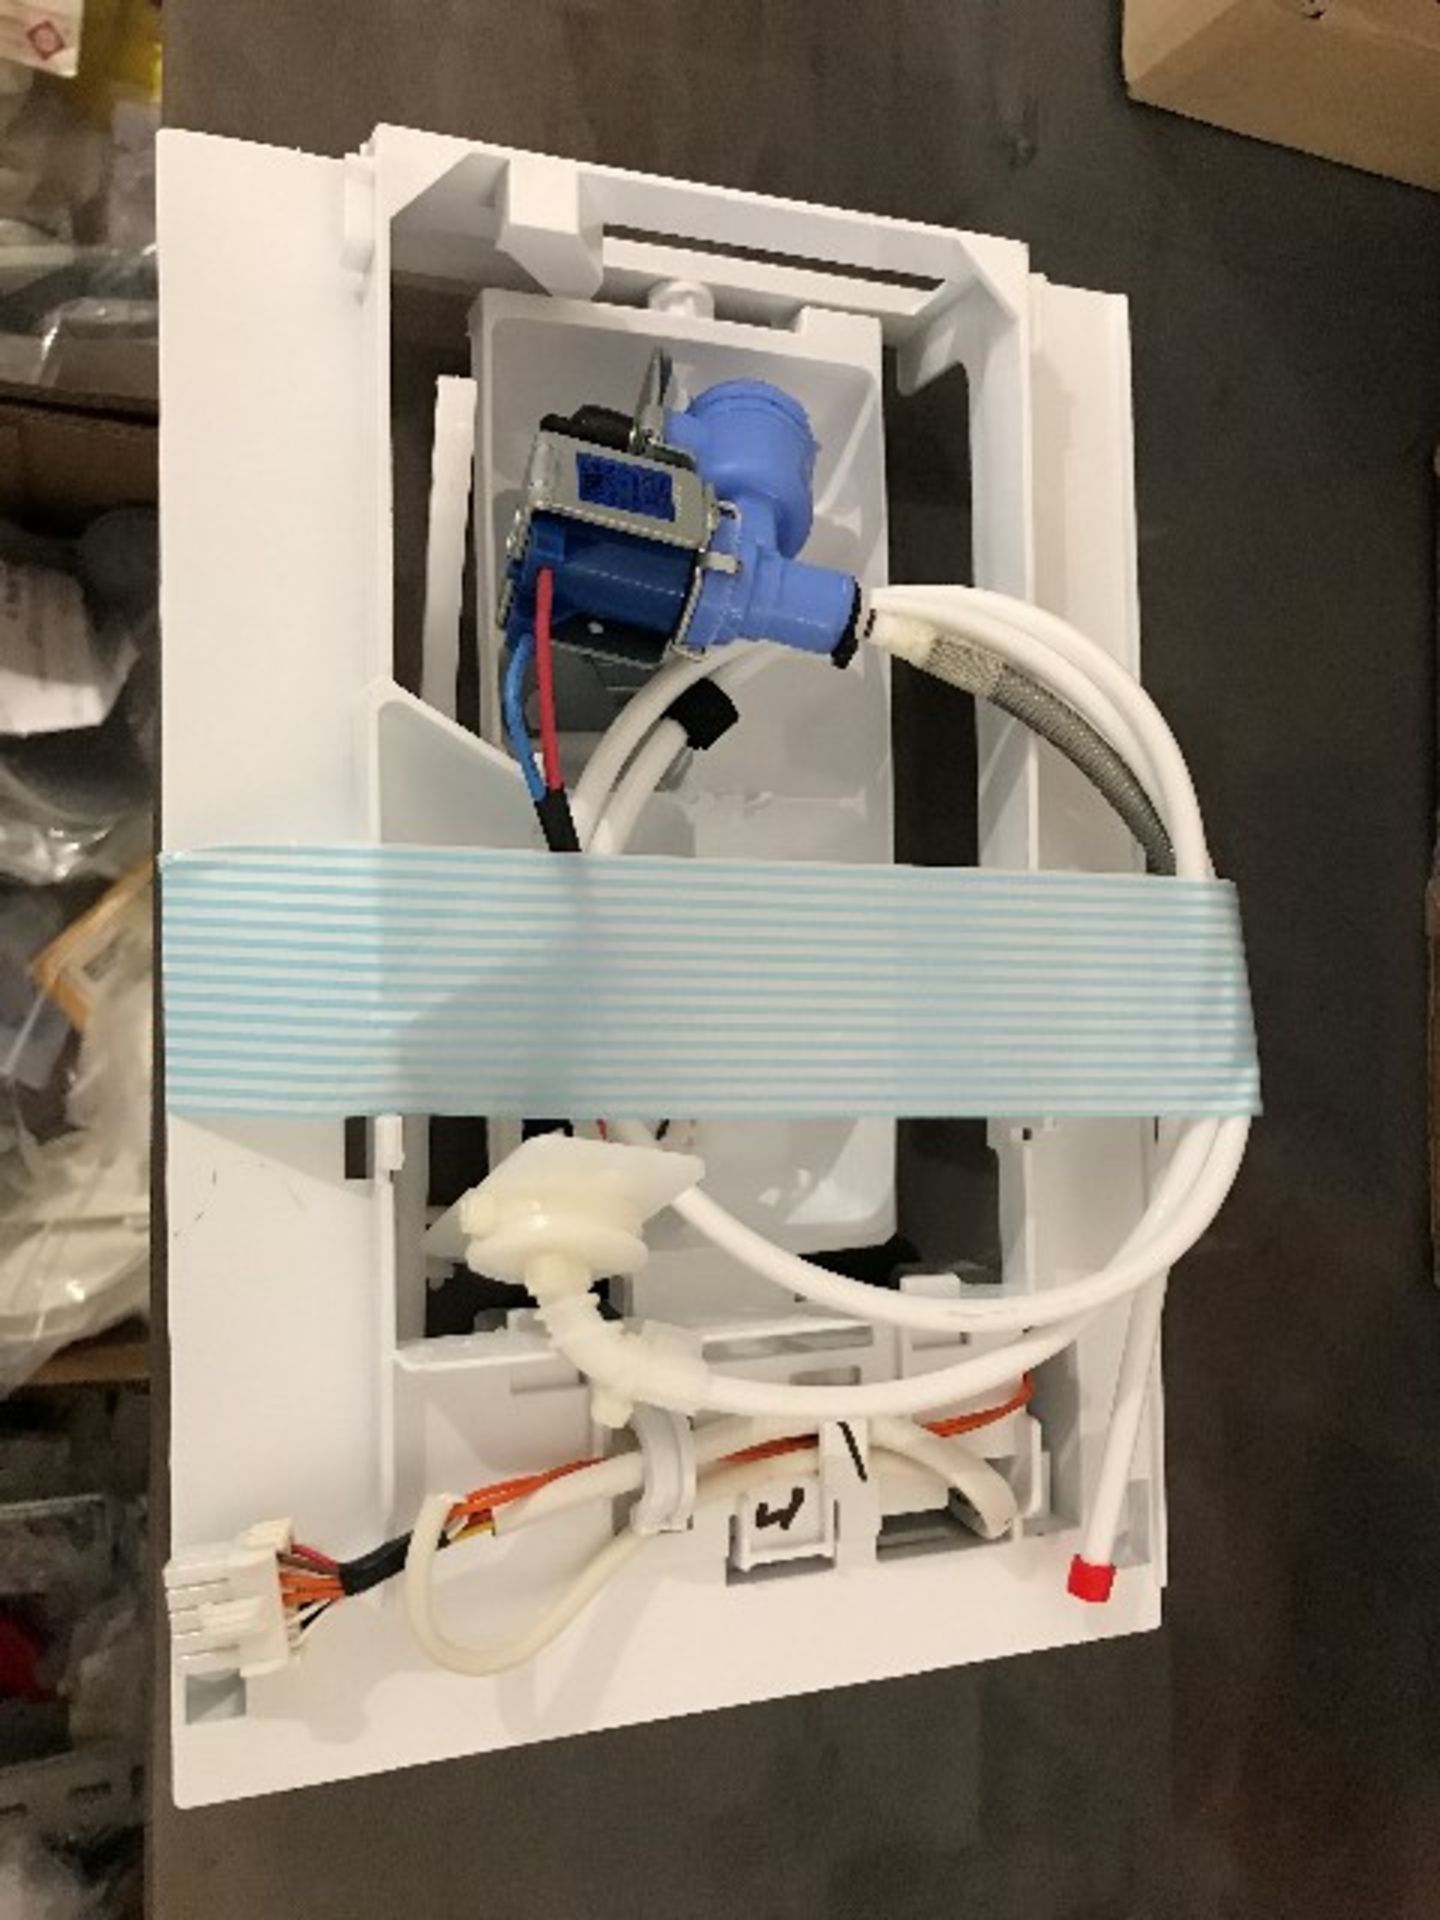 LG icemaker installation kit, 2 pcs